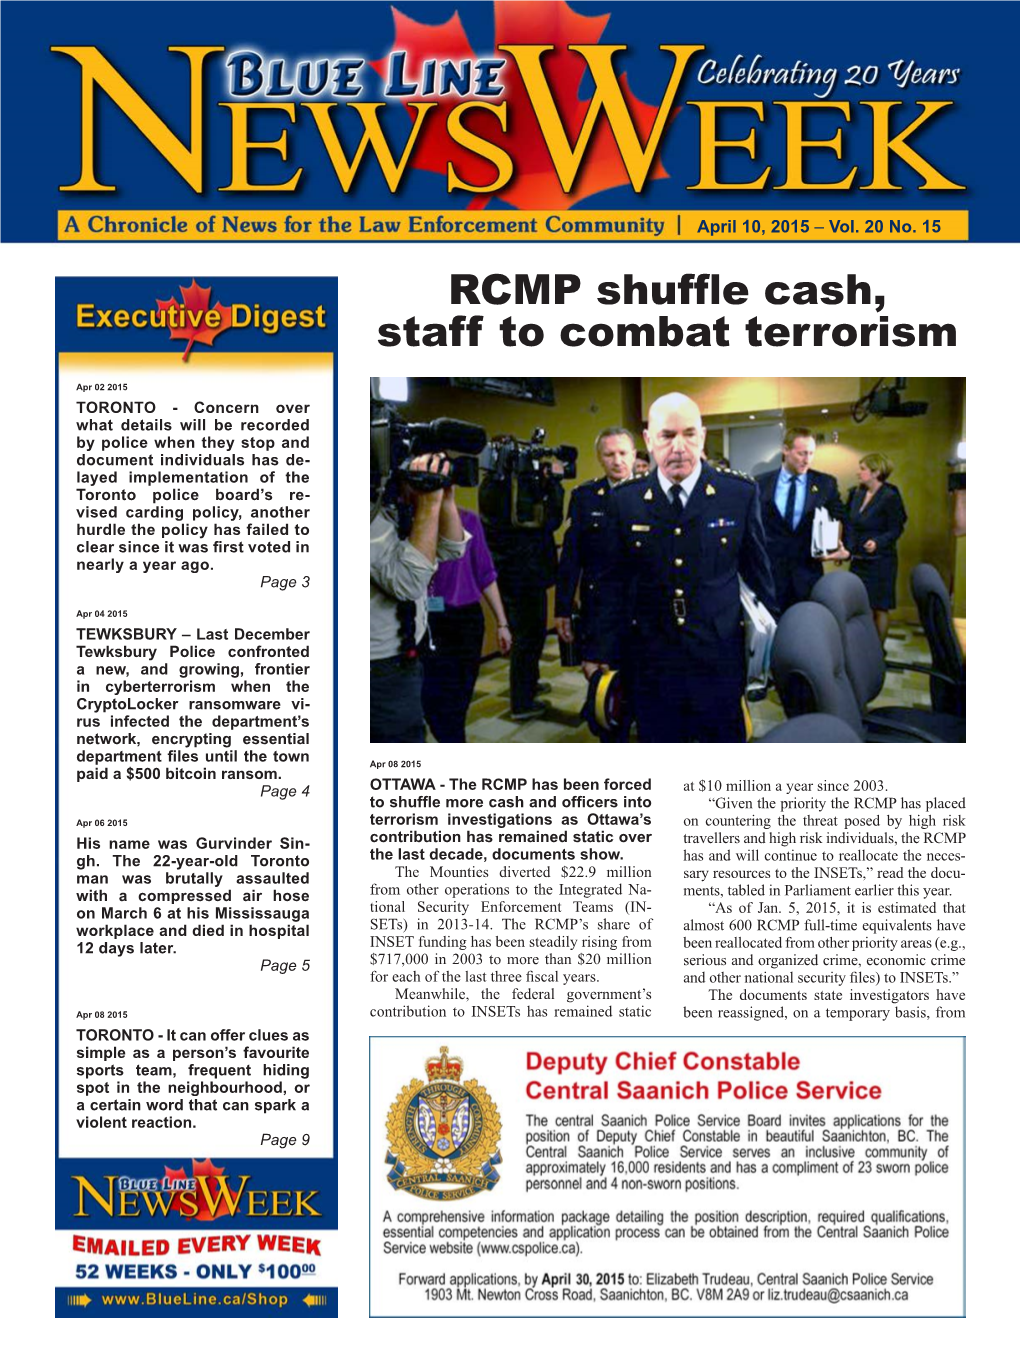 RCMP Shuffle Cash, Staff to Combat Terrorism